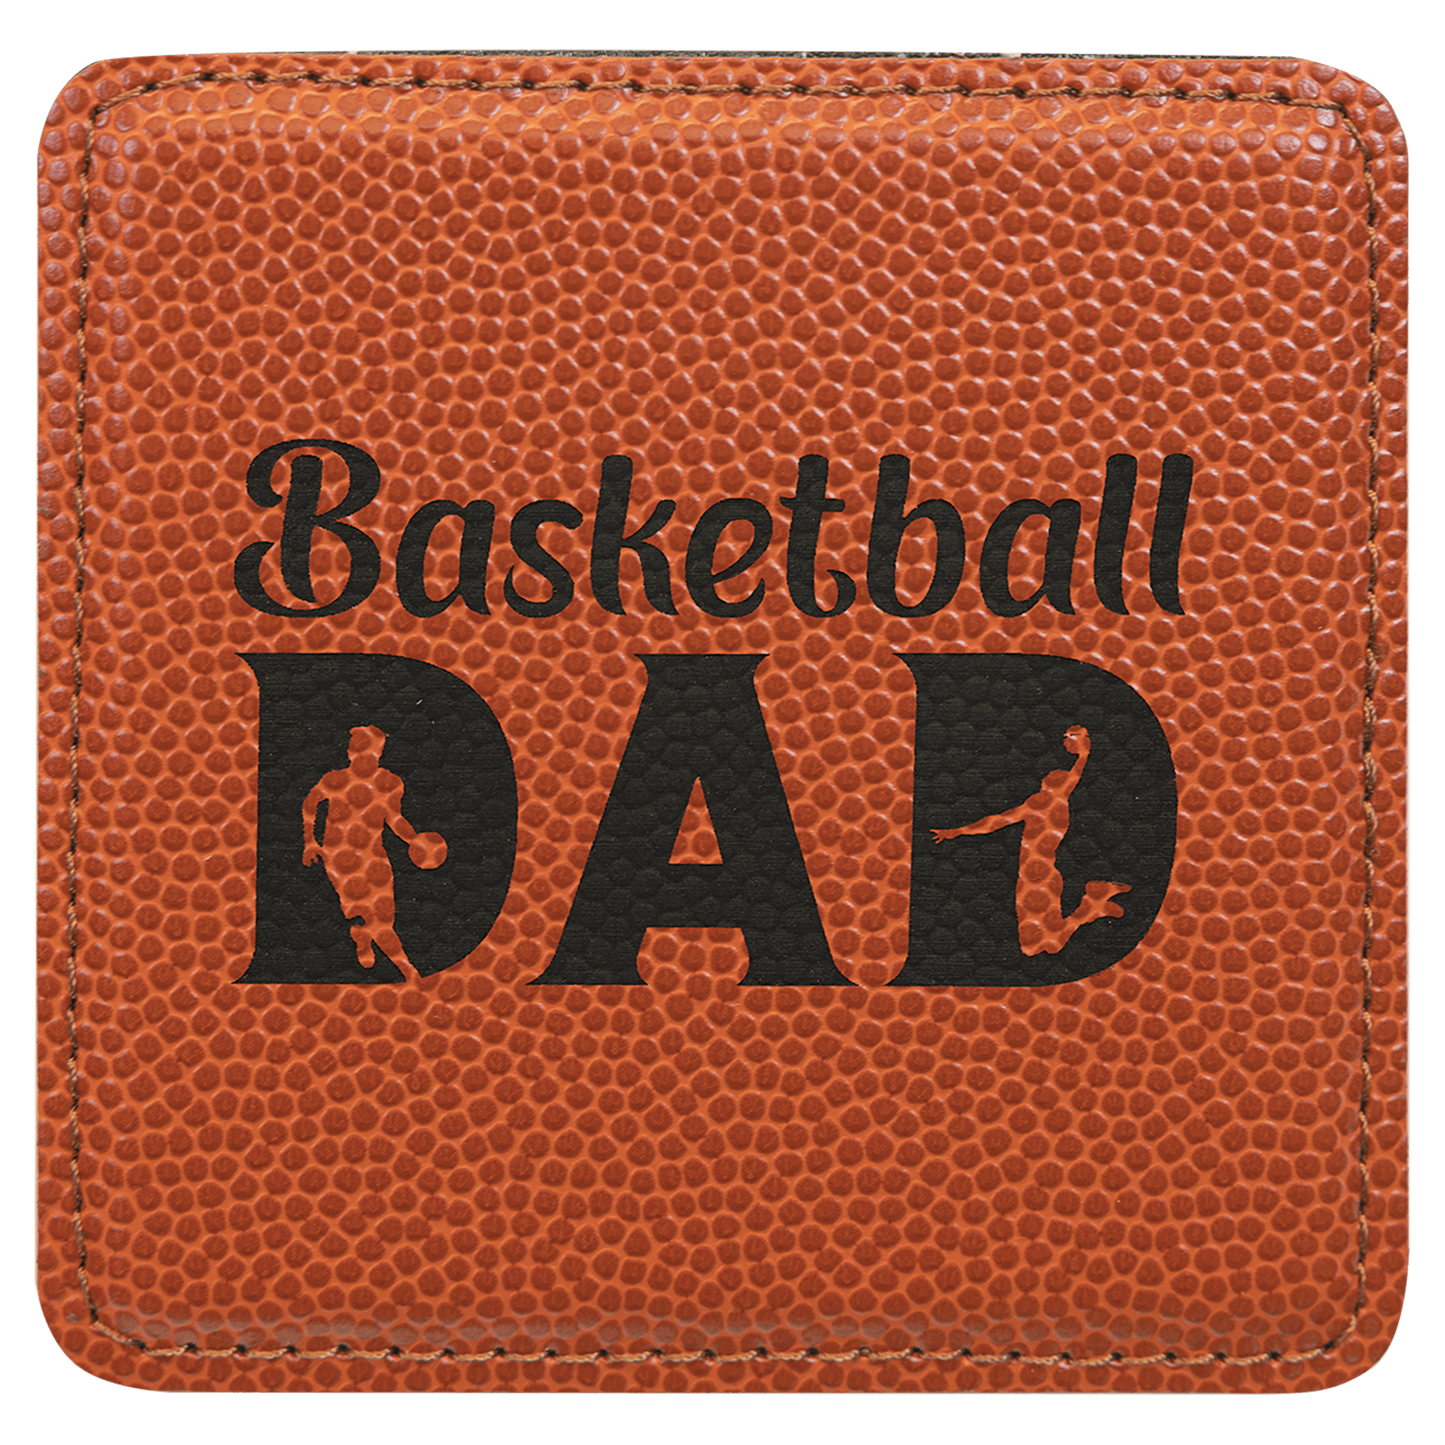 4" x 4" Square Basketball Laserable Leatherette Coaster